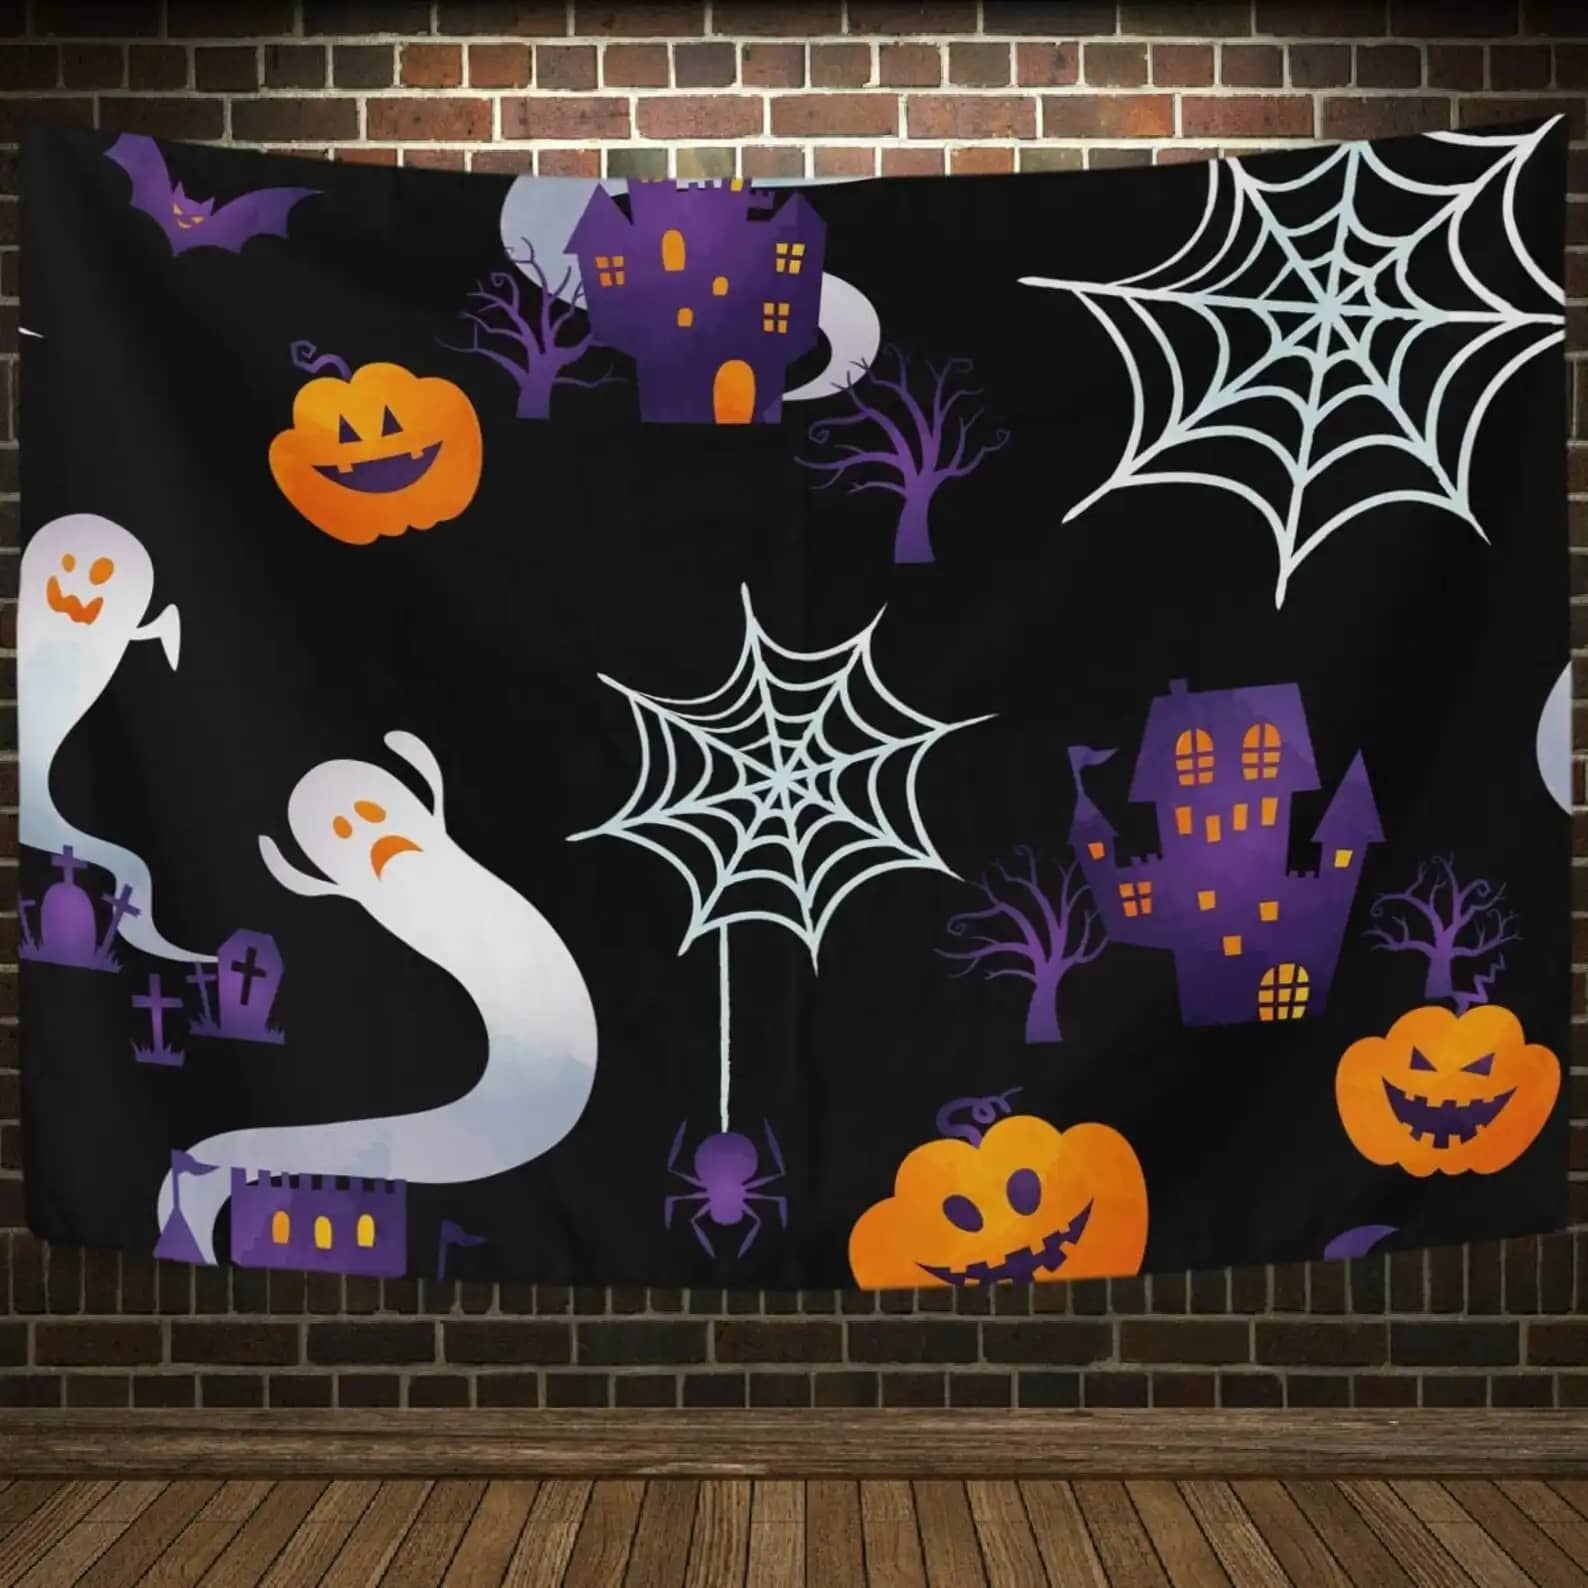 Jack Pumpkin Ghost Spider Wall Art Decor Halloween Gifts Tapestry